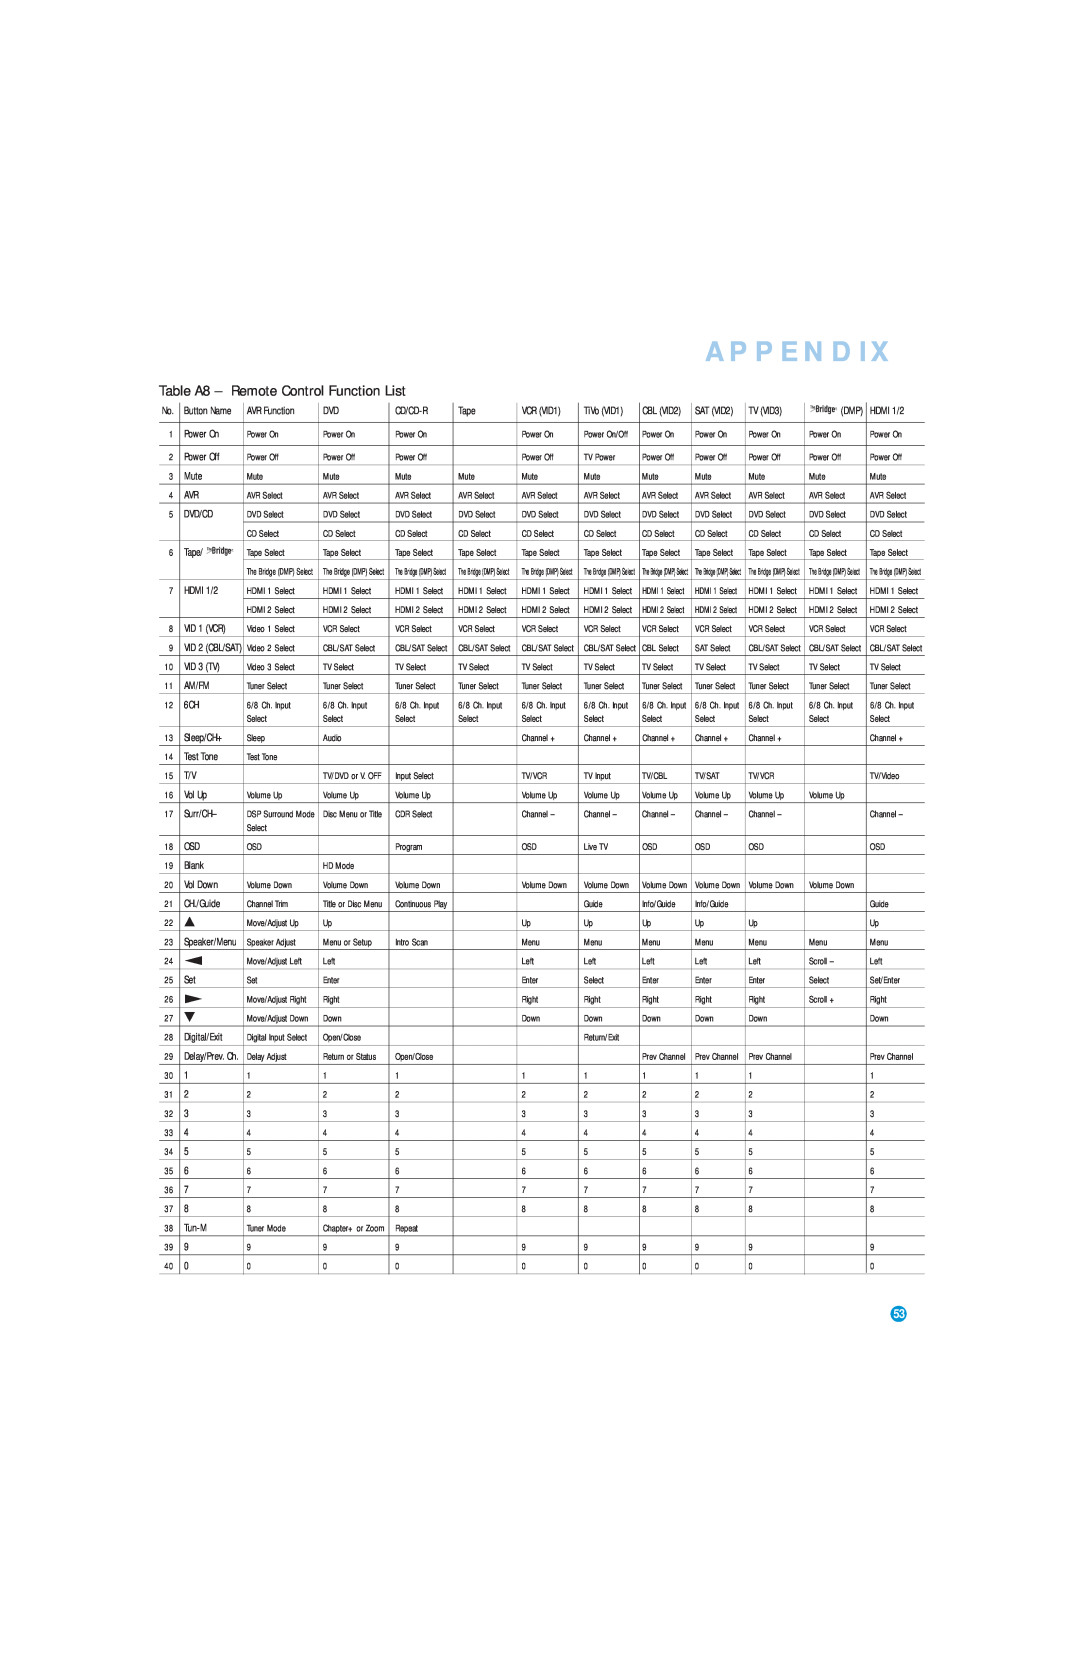 Harman-Kardon AVR 146 owner manual Table A8 - Remote Control Function List, Appendix 